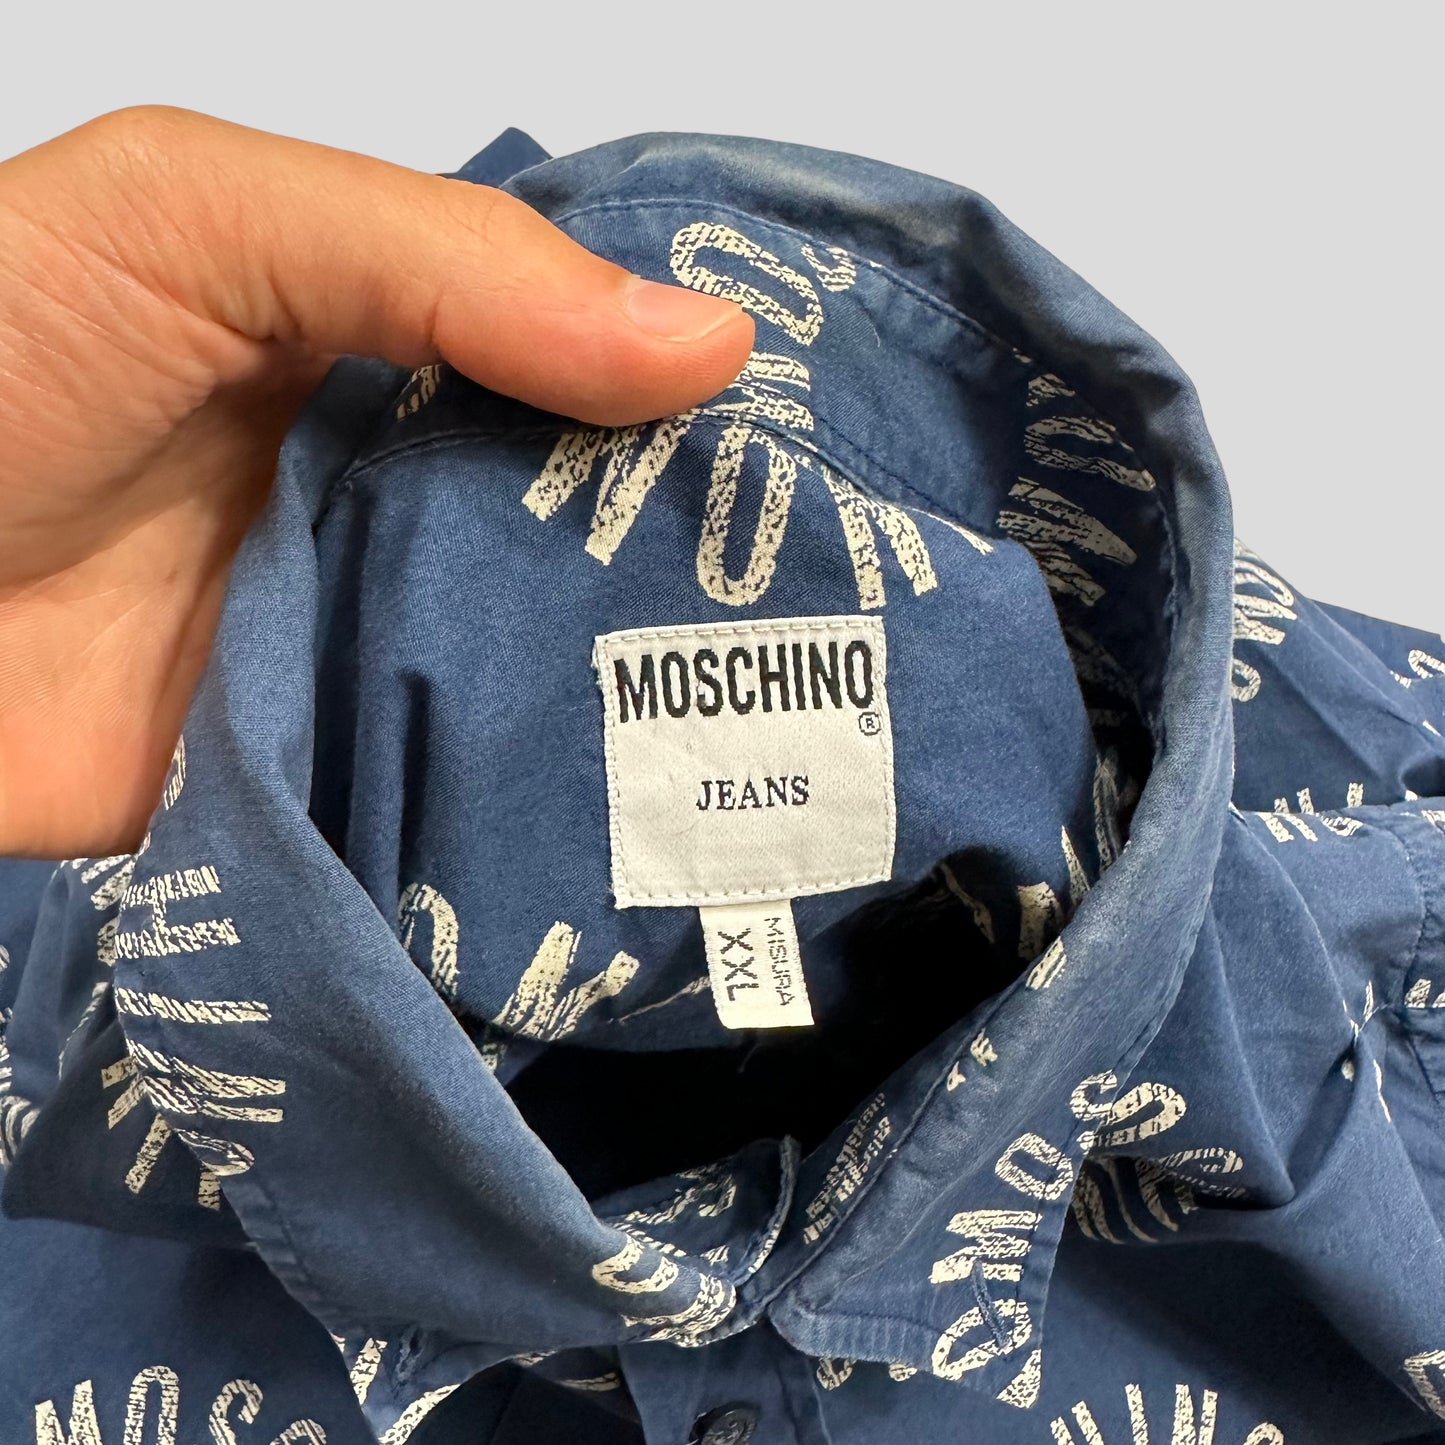 Moschino Jeans 90’s Circle Spellout Shirt - XL/XXL